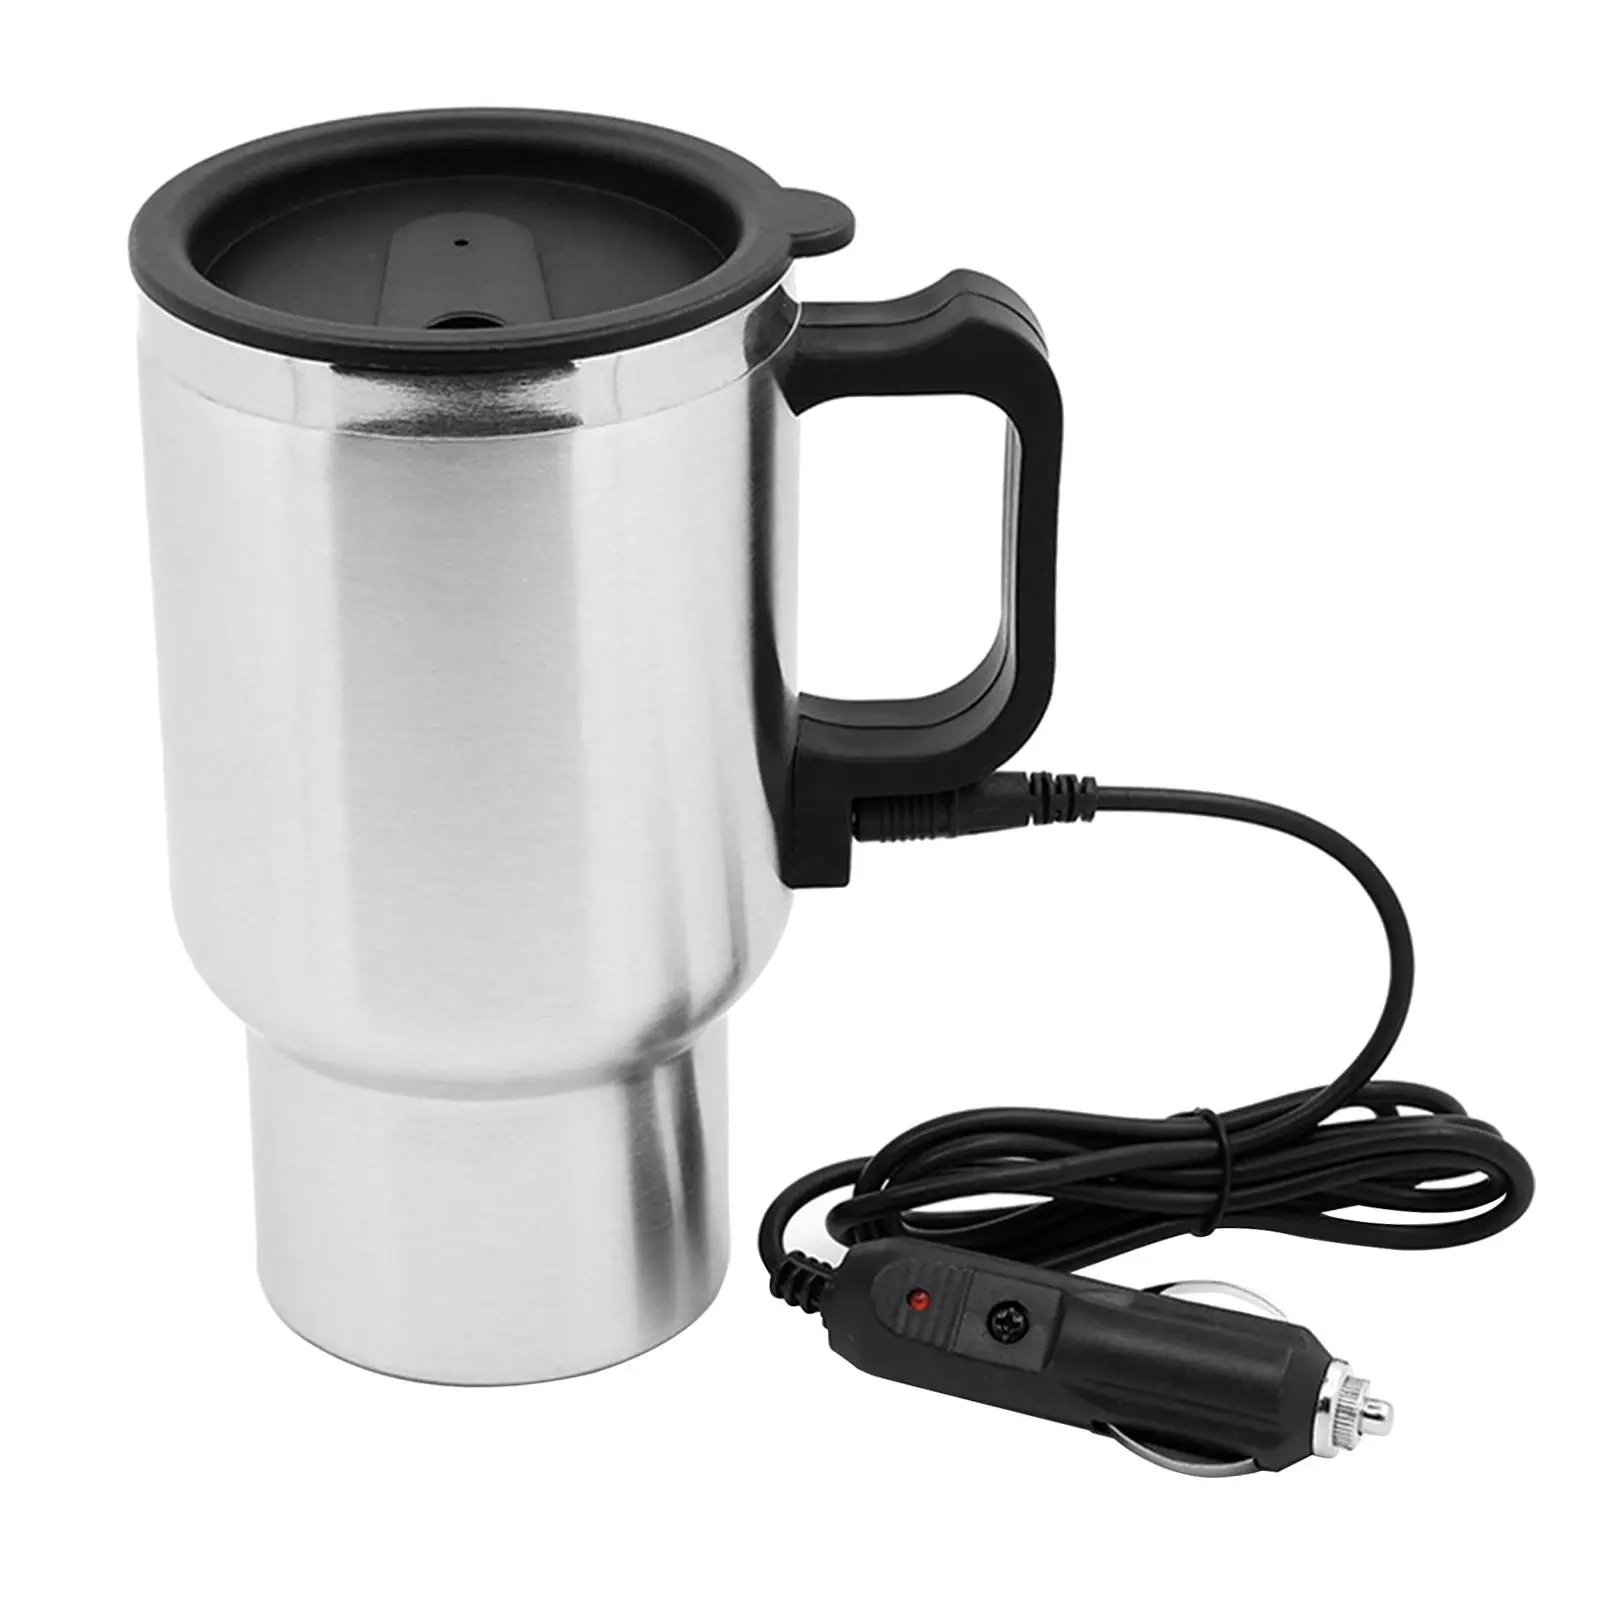 Car Heating Cup Heated Mug 500ml Stainless Steel for Tea Coffee